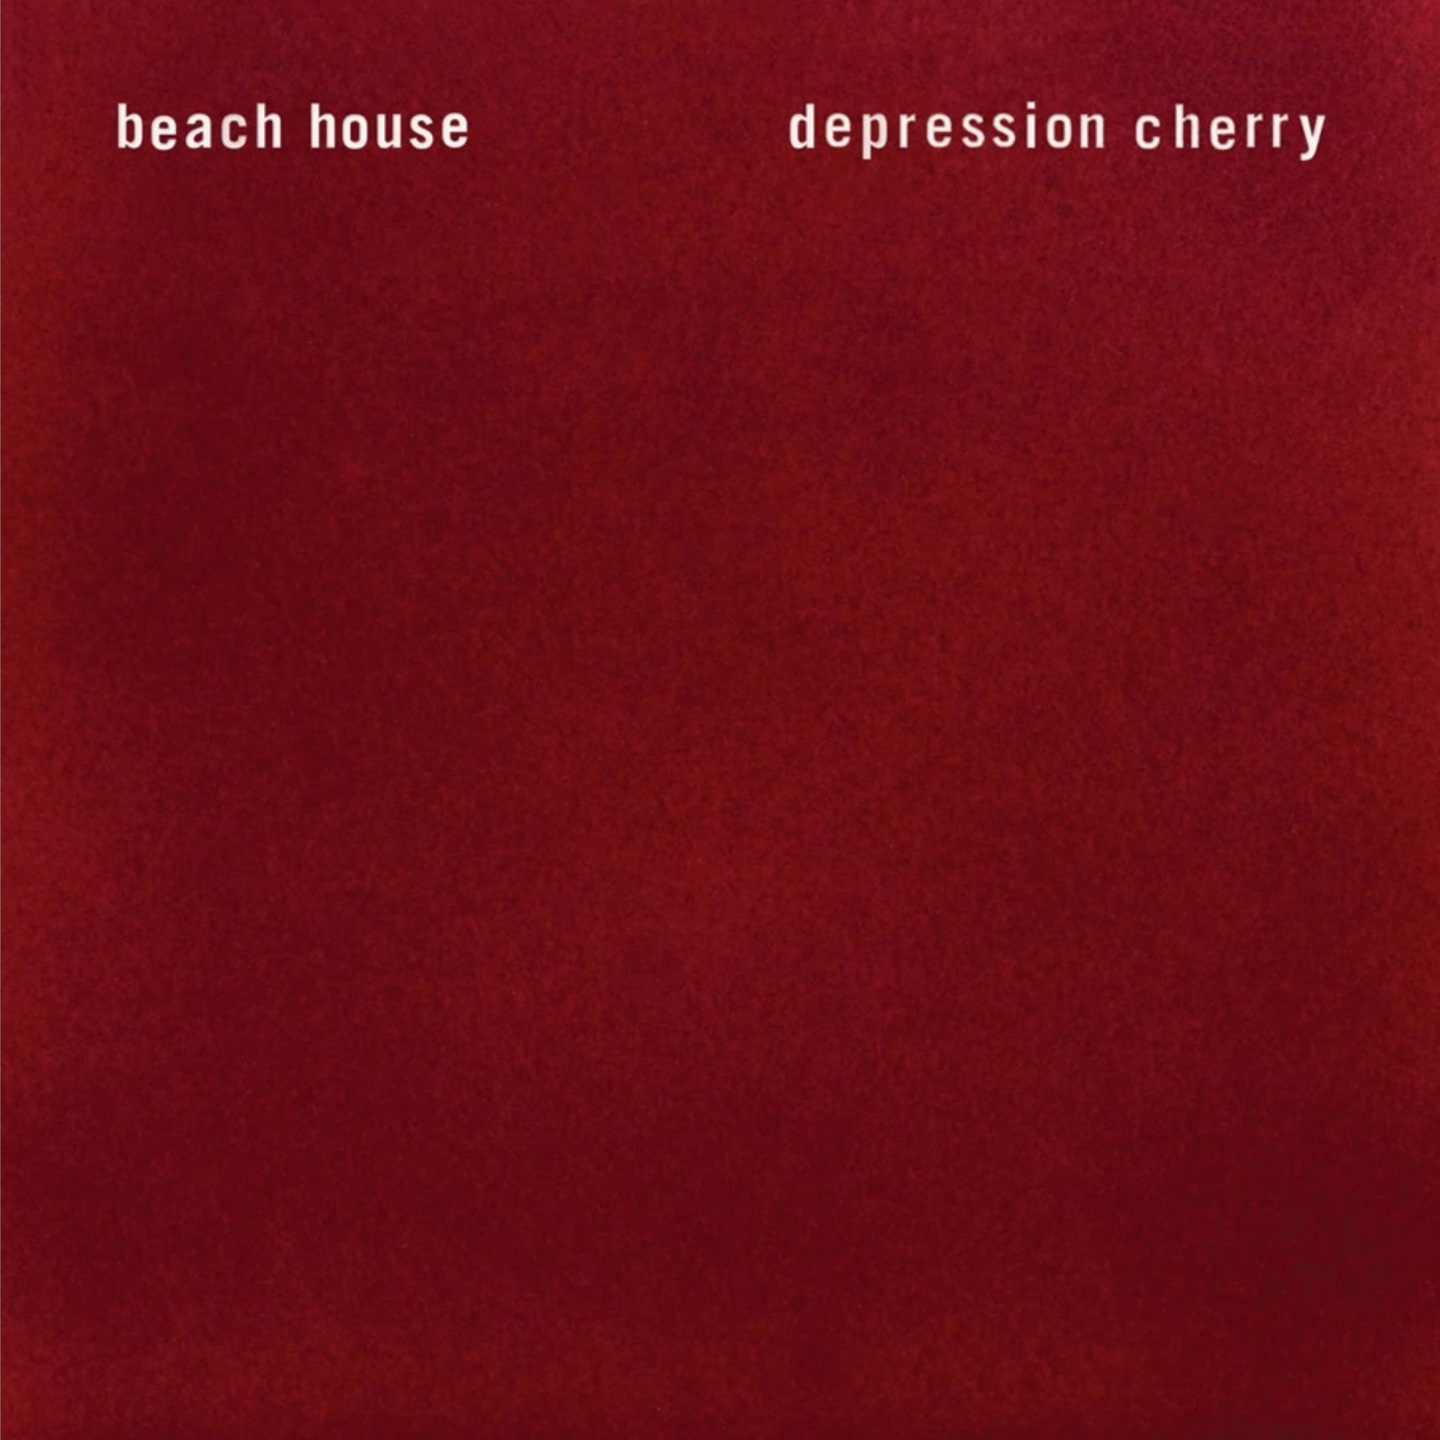 BEACH HOUSE - Depression Cherry LP